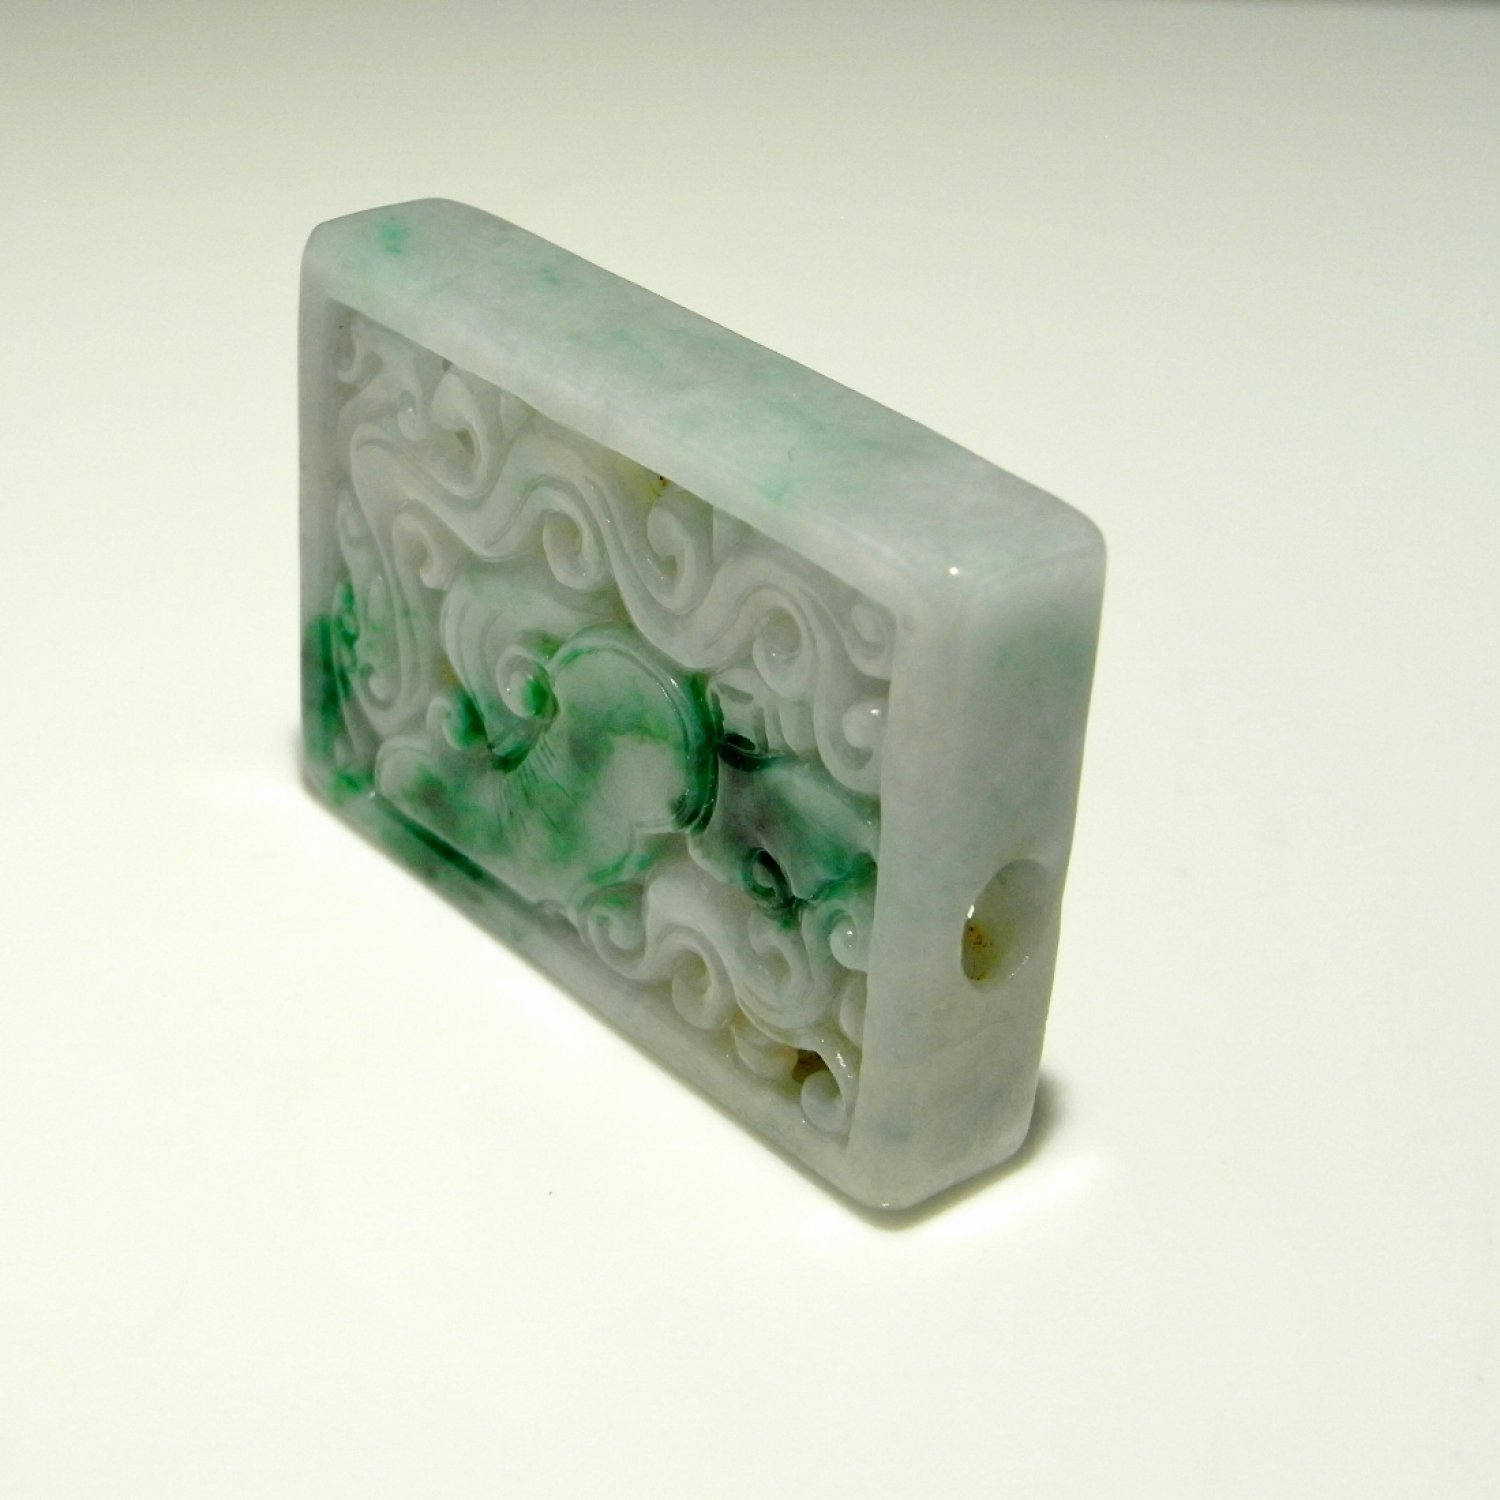 Circa 1800 Jadeite Jade Carved Pendant Openwork Jade Pendant Green Jade Antique Chinese Pendant Ruyi Lingzhi Dragon Amulet Unisex Jewelry Reticulated Openwork Pierced